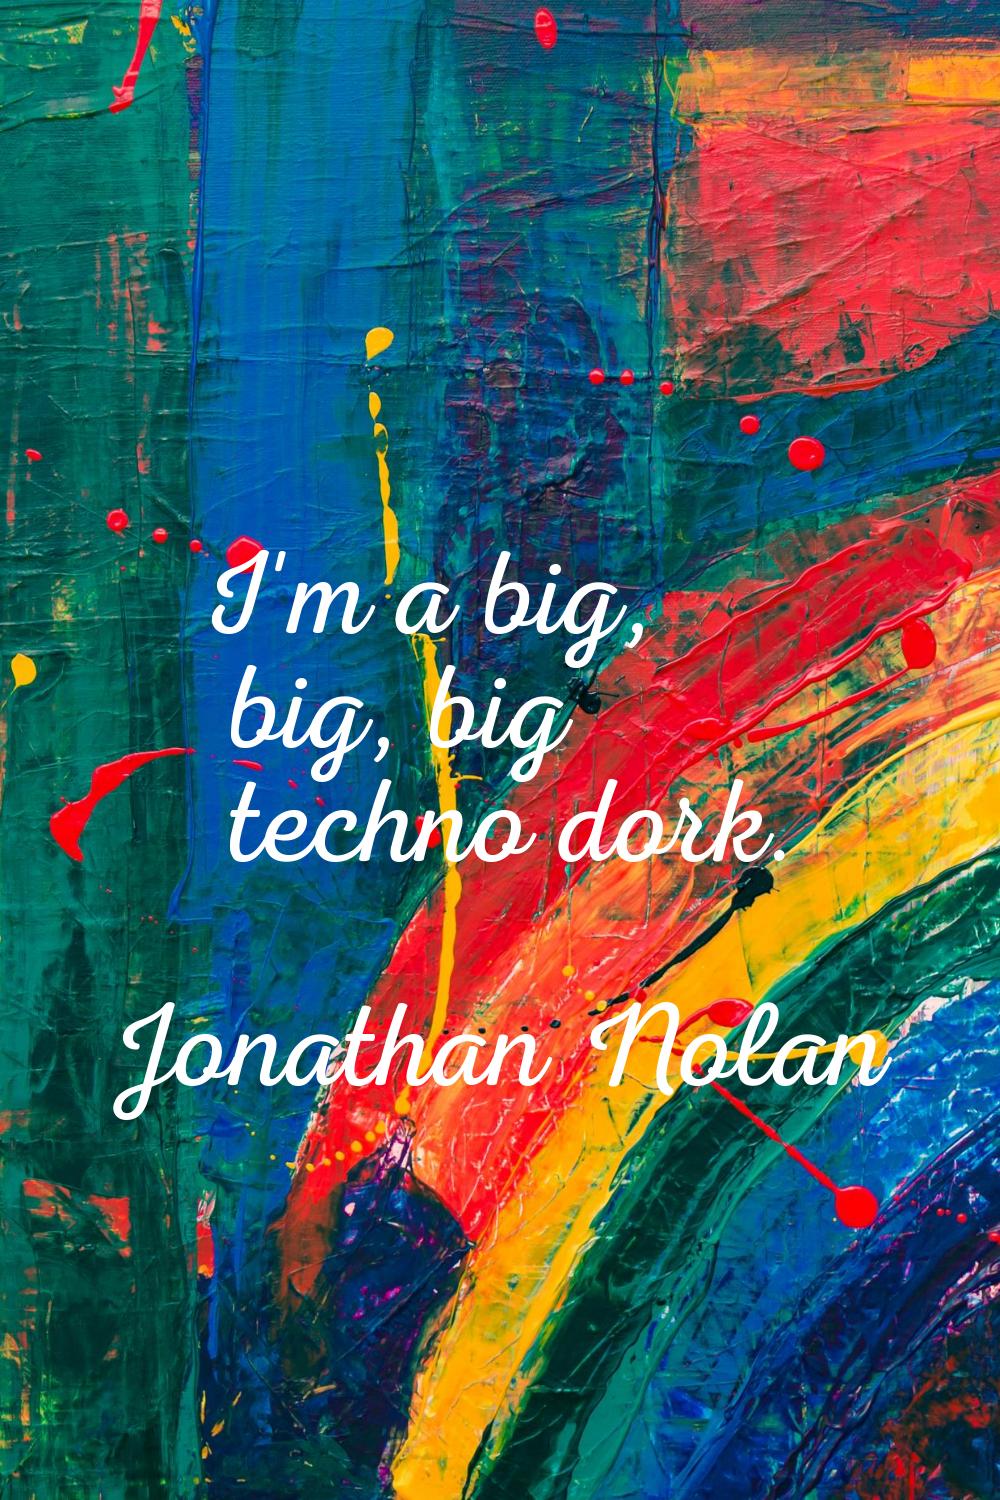 I'm a big, big, big techno dork.